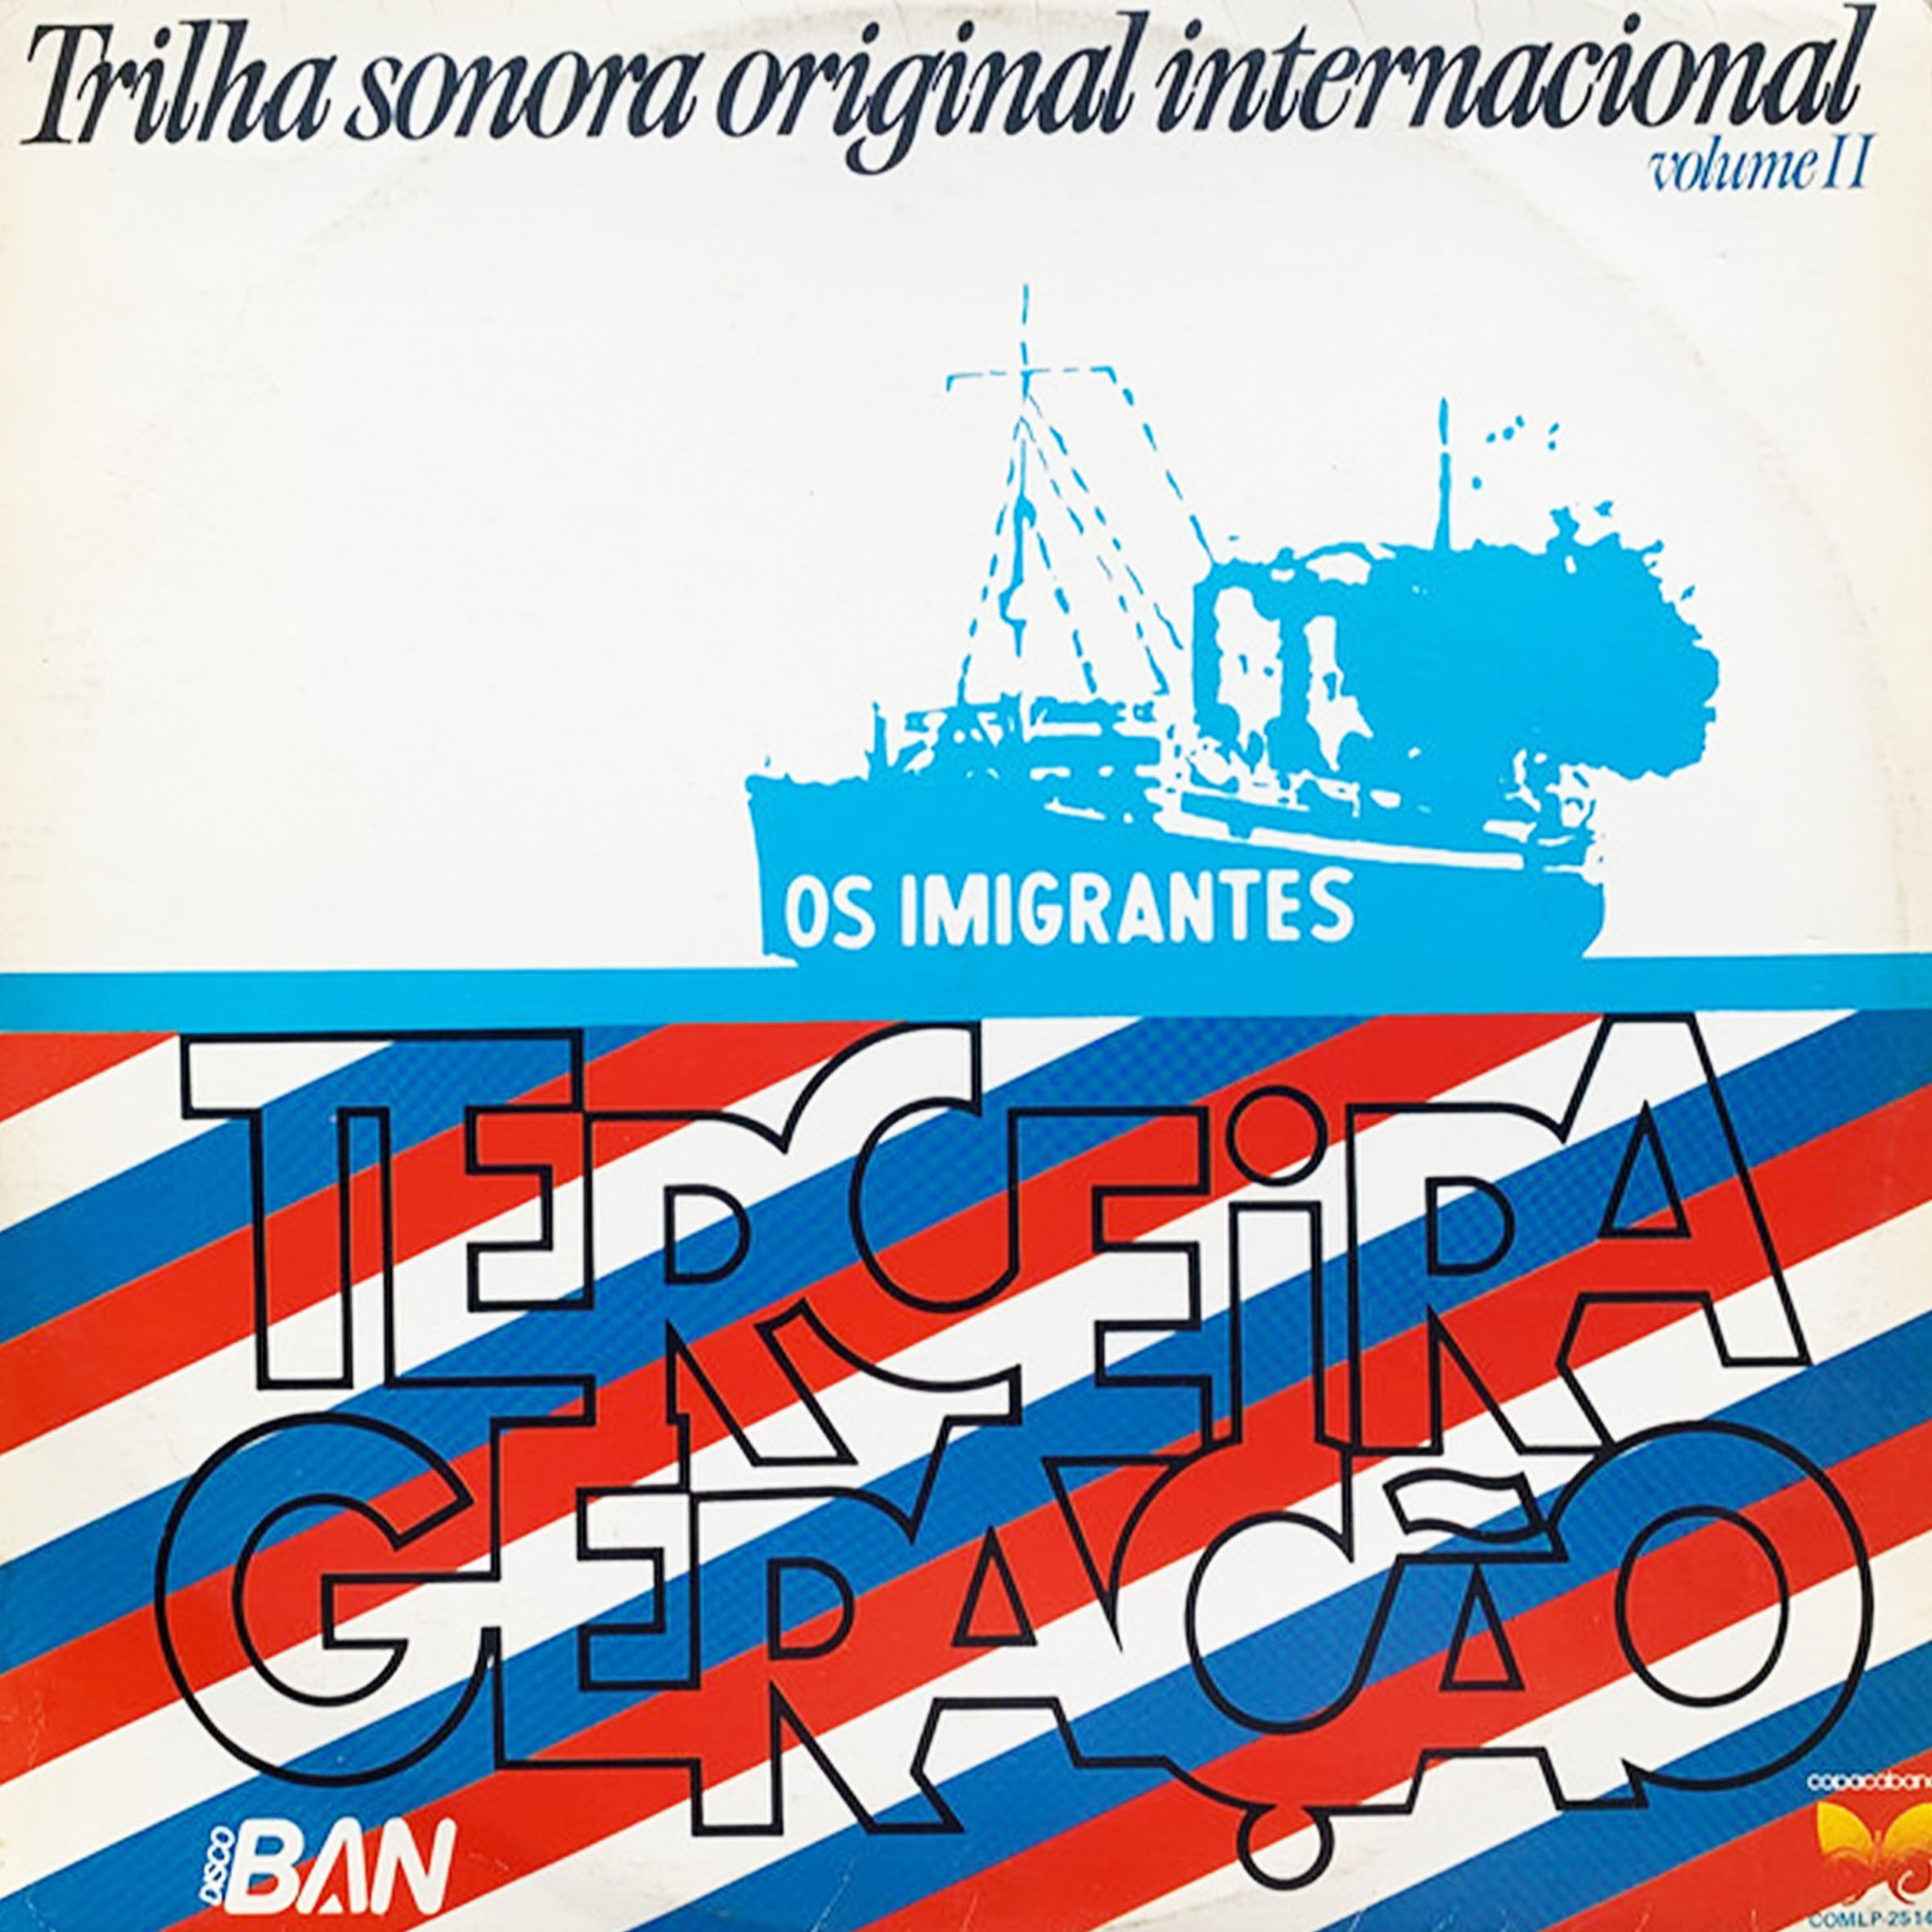 Vinil - Os Imigrantes - Volume II Trilha Sonora Original Internacional